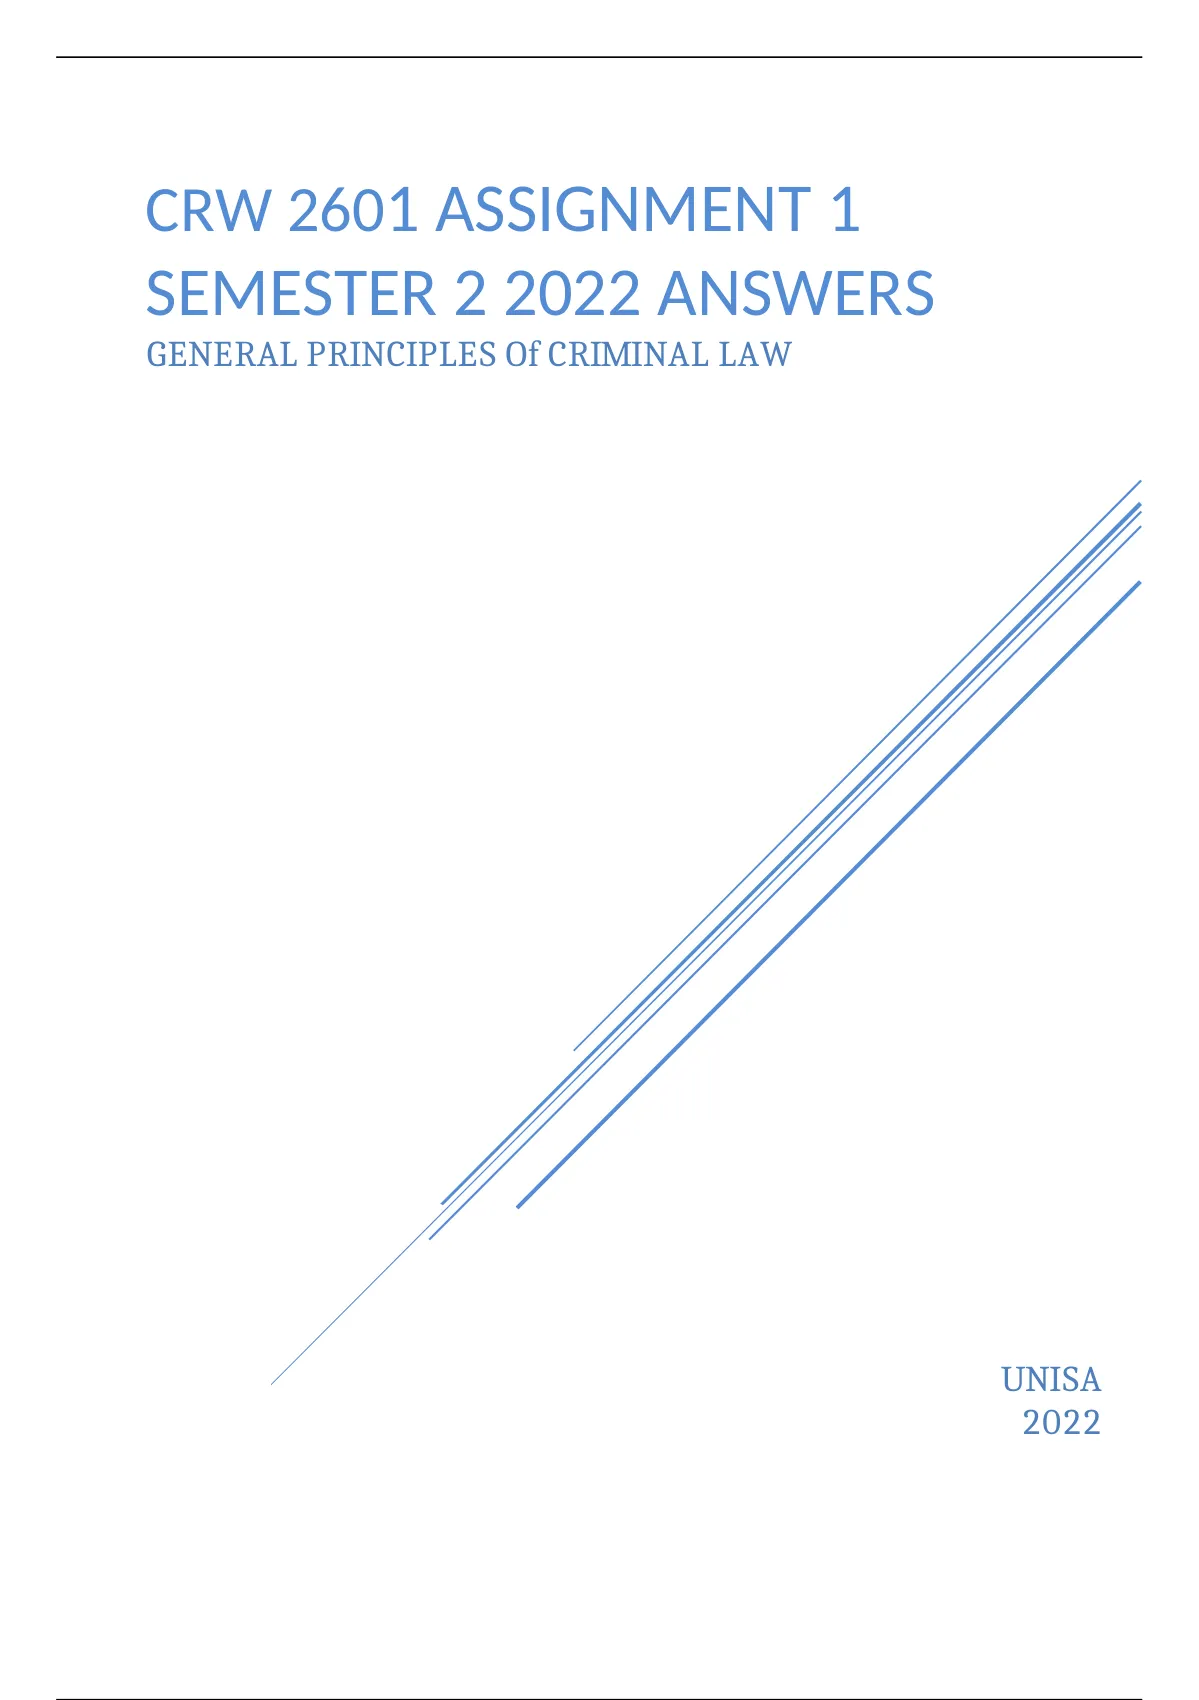 crw2601 assignment 1 2022 semester 2